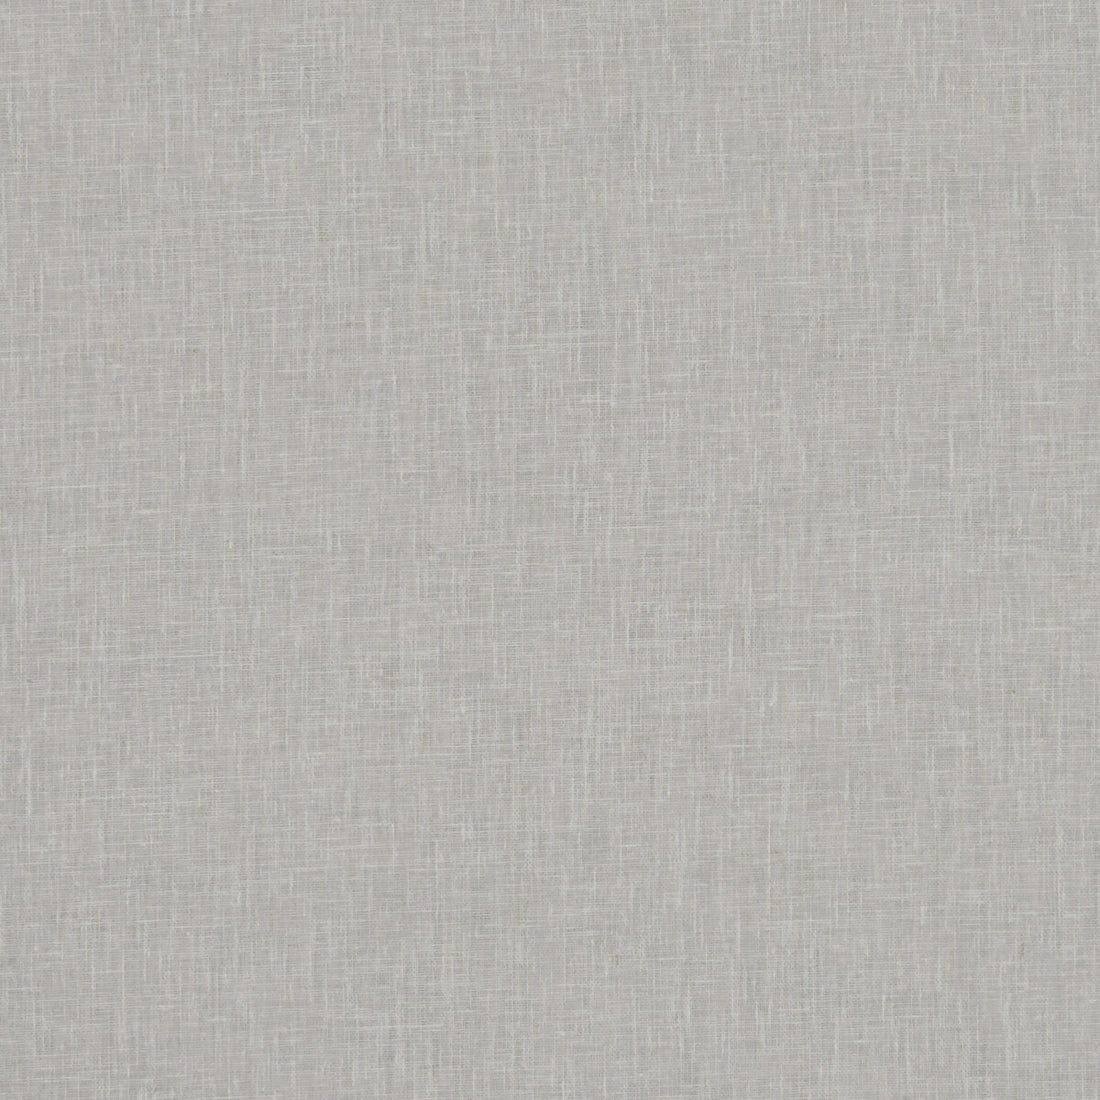 Midori fabric in dove color - pattern F1068/11.CAC.0 - by Clarke And Clarke in the Clarke &amp; Clarke Midori collection